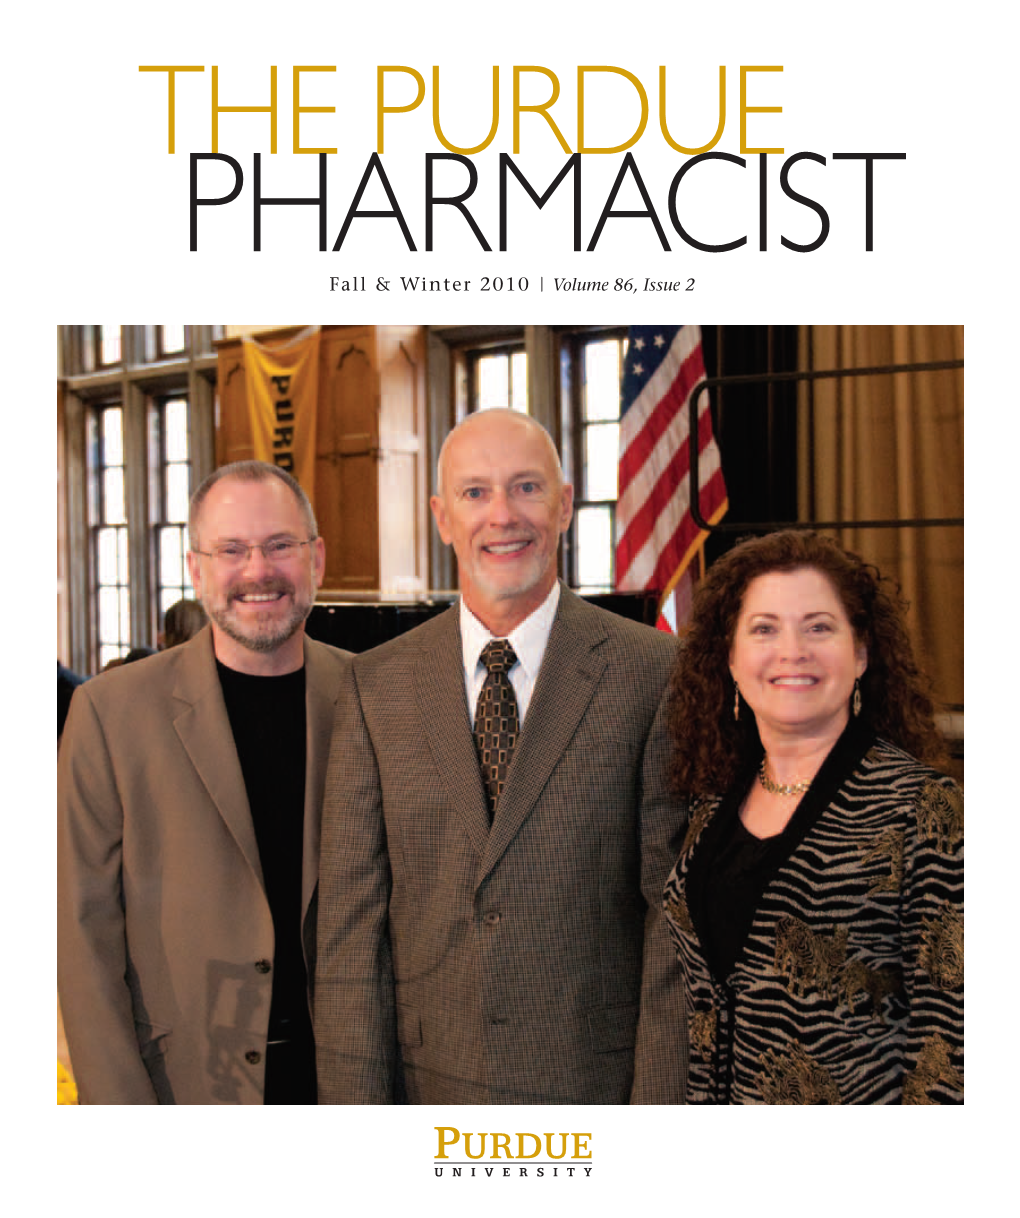 The Purdue Pharmacist, Fall & Winter 2010